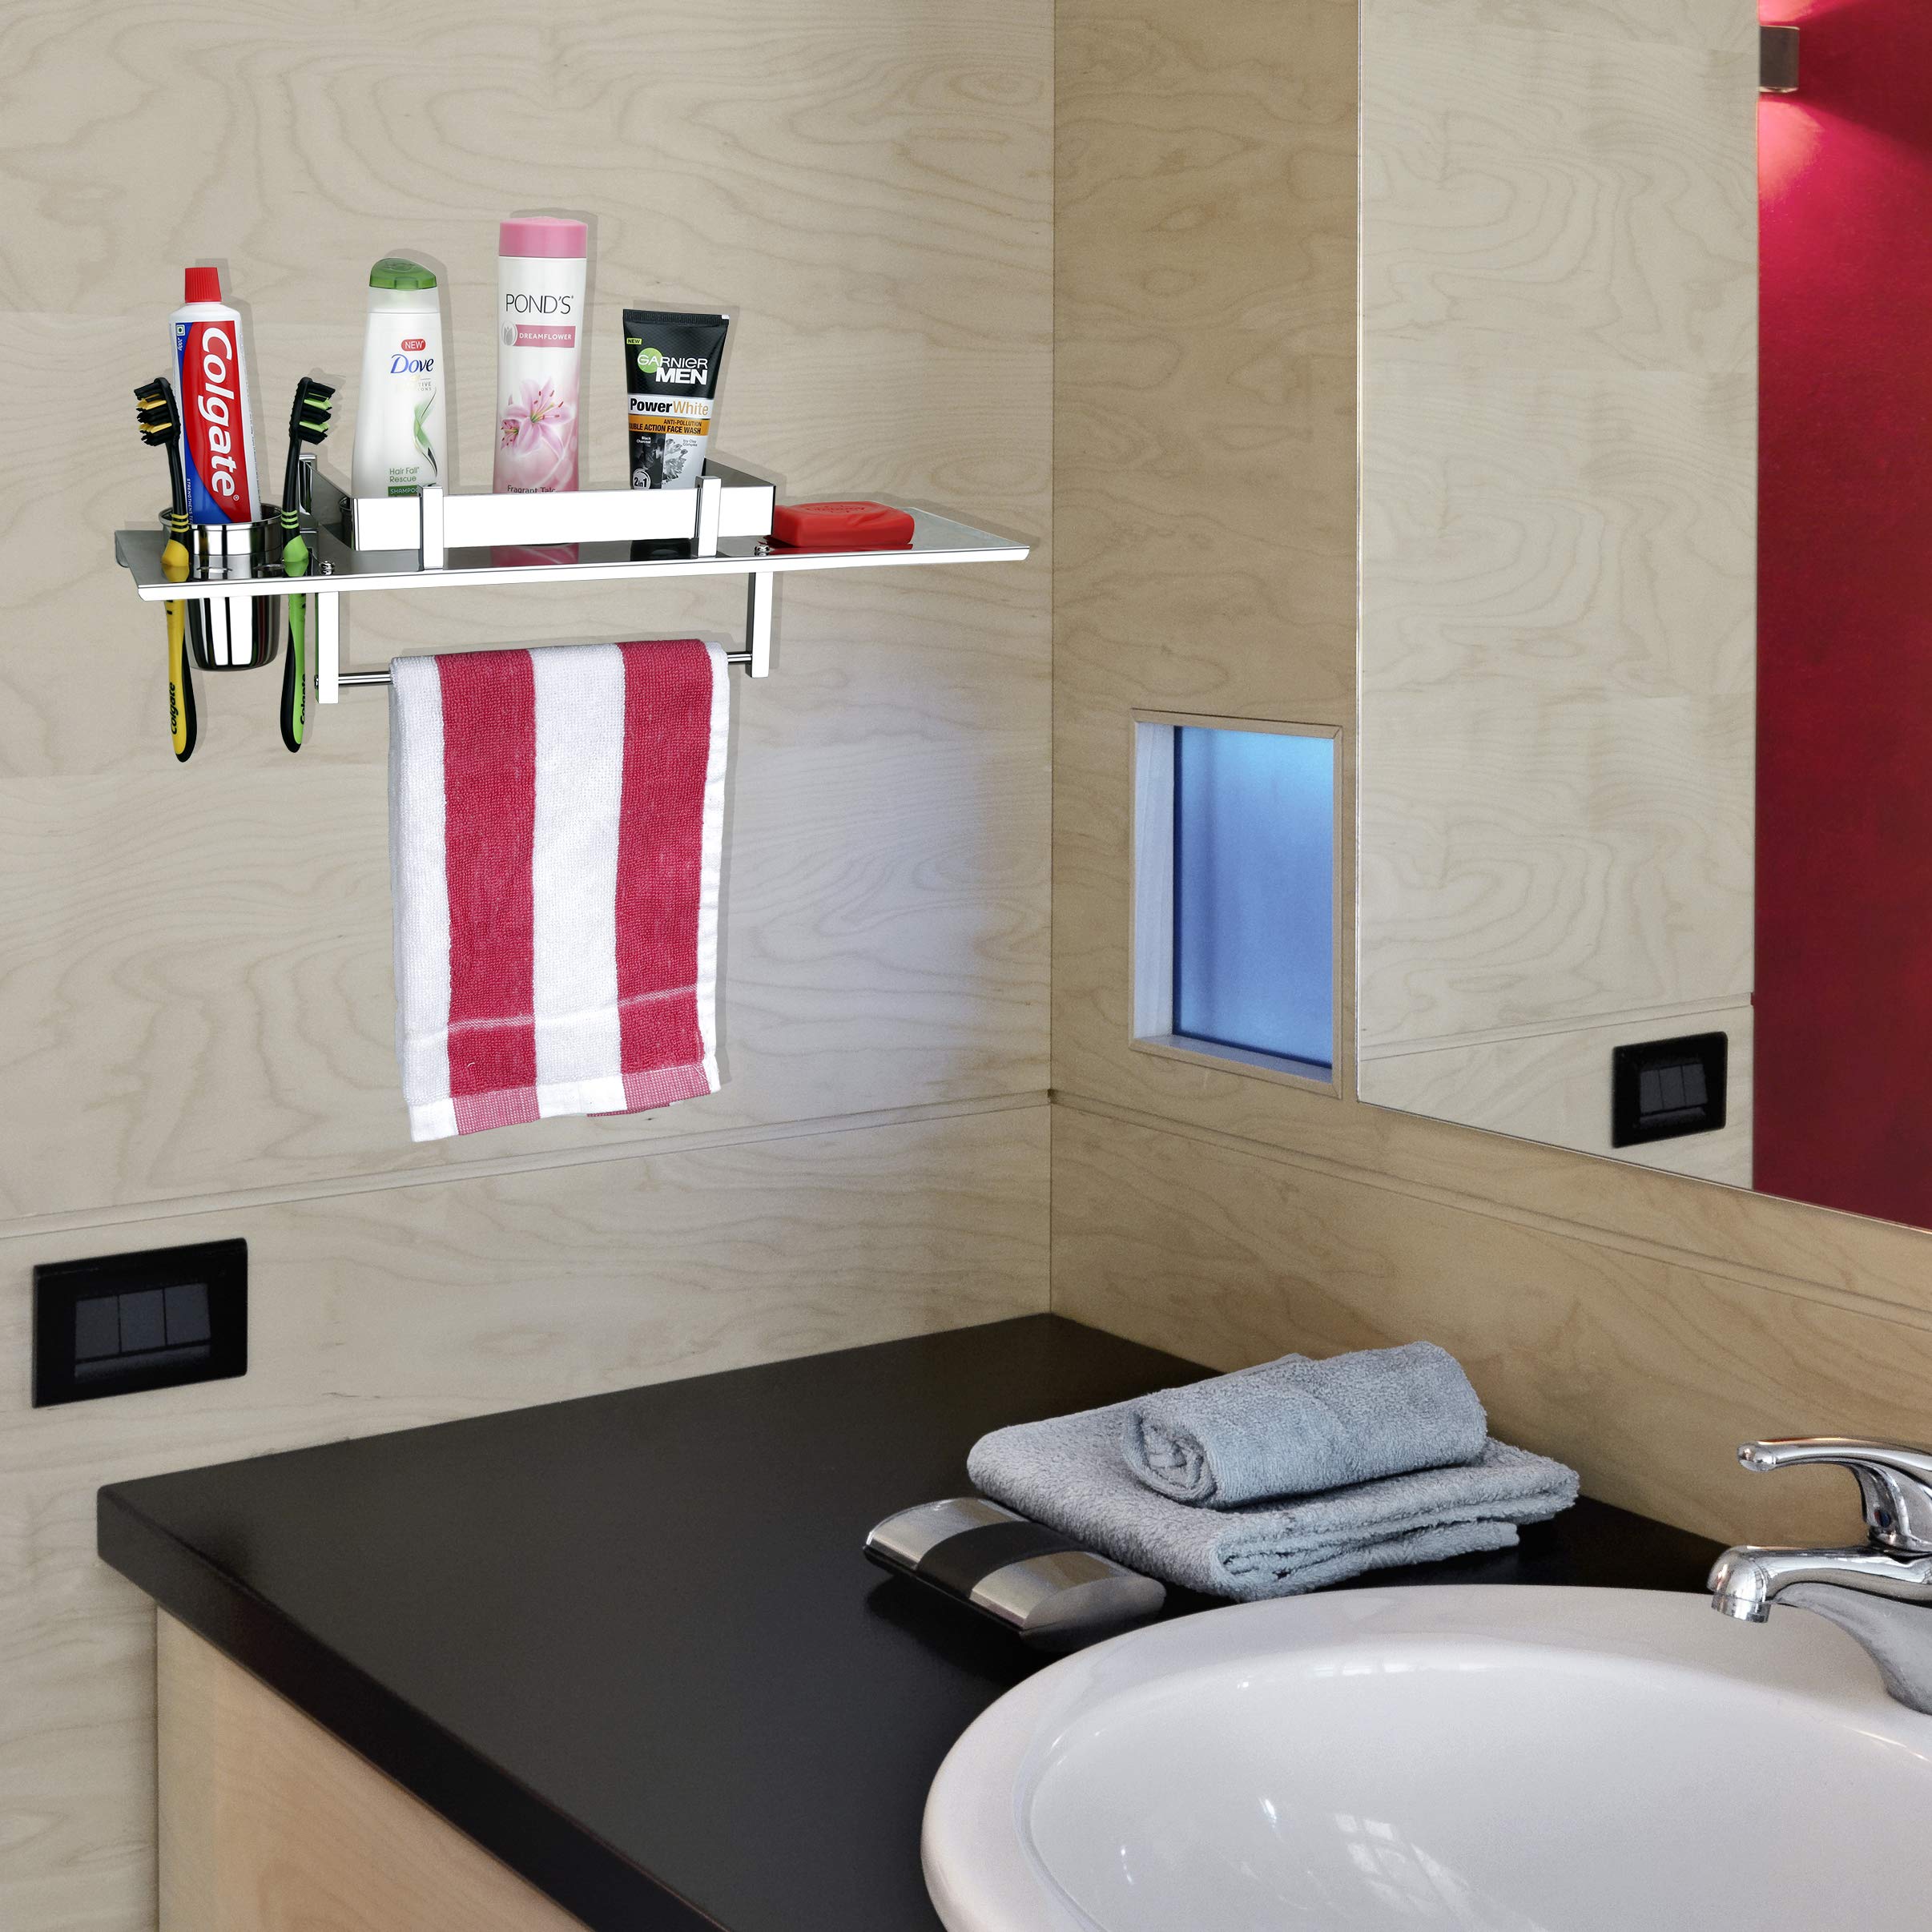 Plantex Stainless Steel 4 in 1 Multipurpose Bathroom Shelf/Rack/Towel Hanger/Tumbler Holder/Soap Dish/Bathroom Accessories (18 x 5 Inches) - Pack of 3